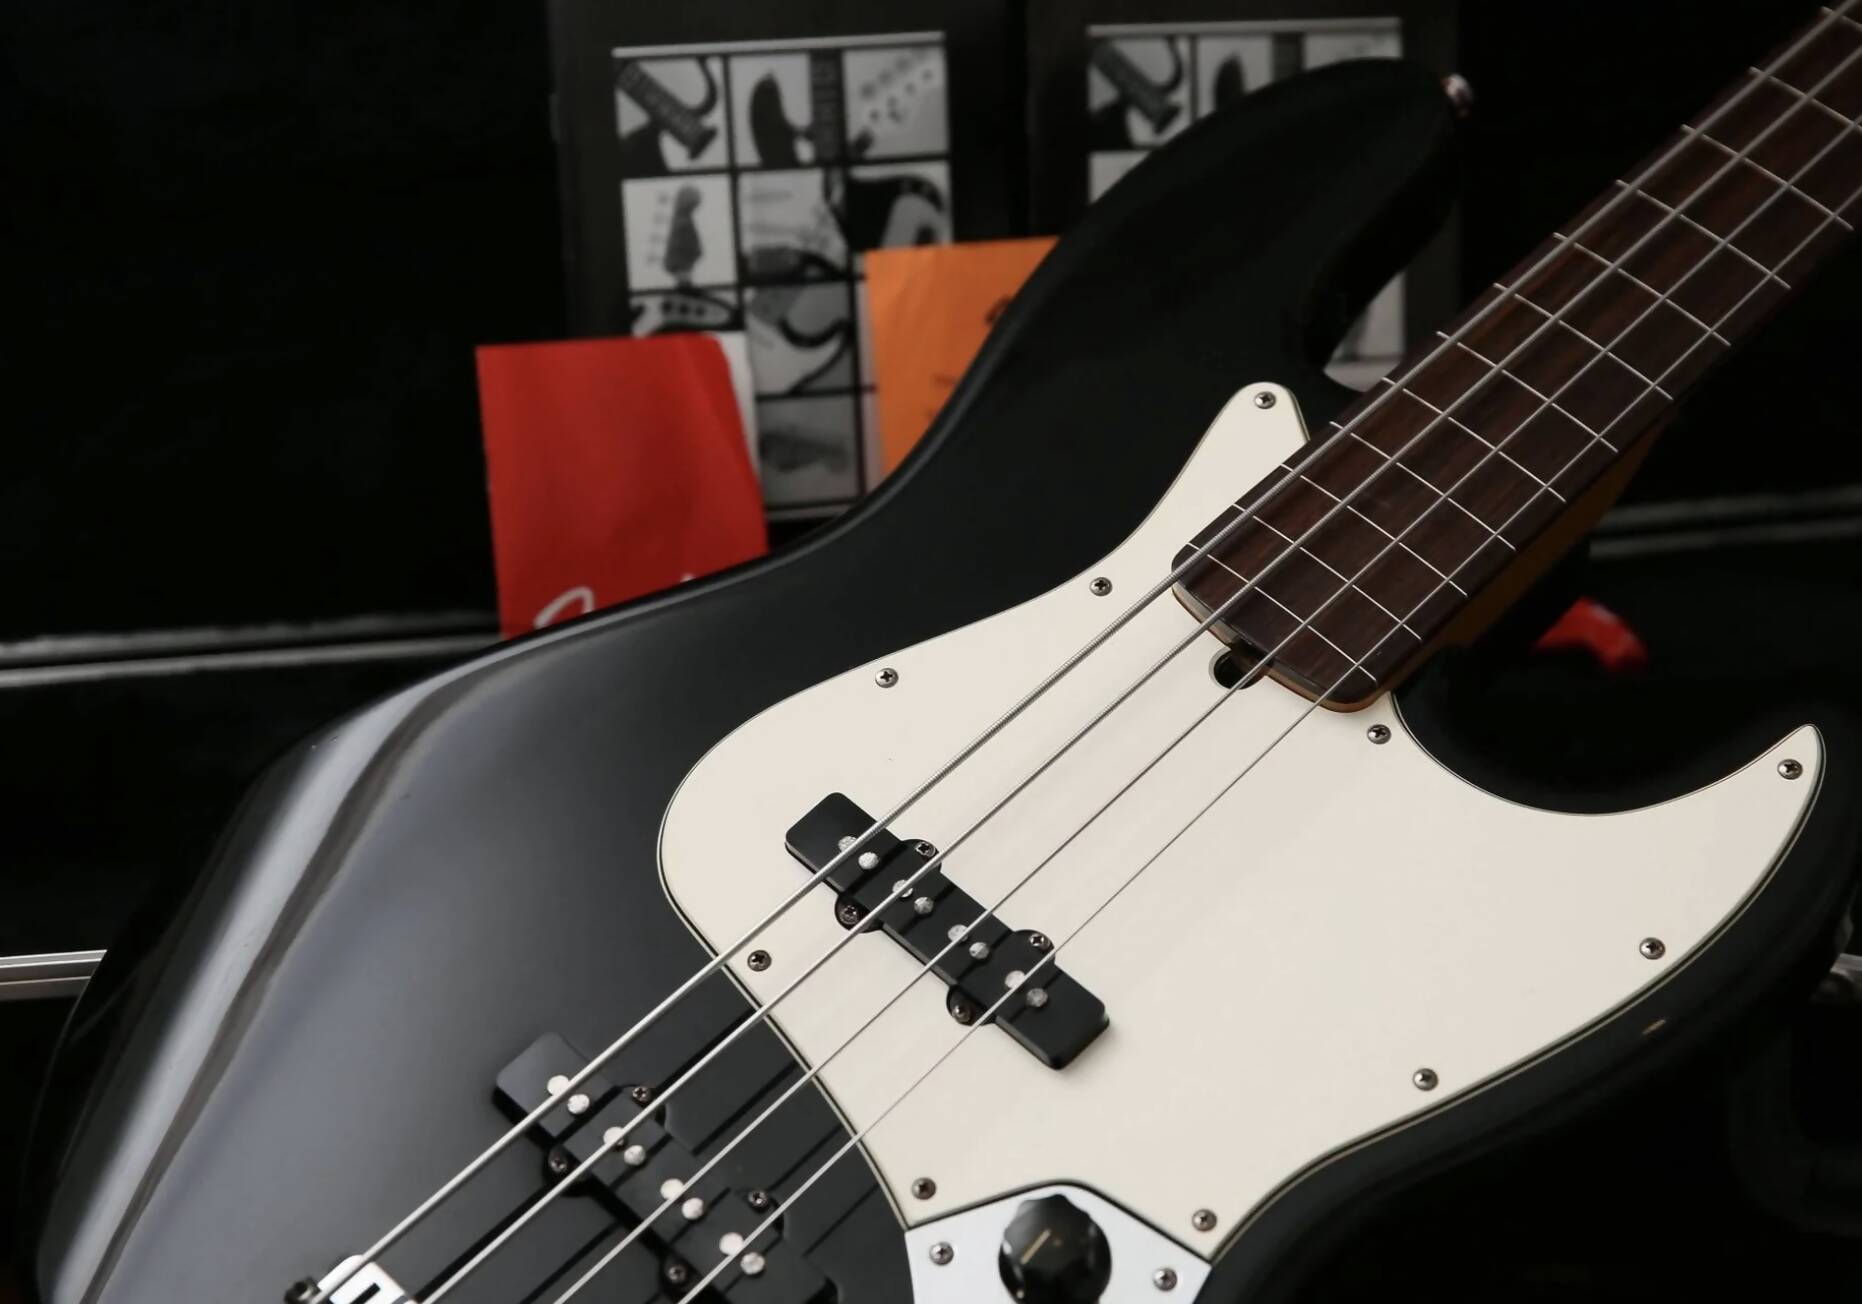 1999 Fender American Standard Fretless Jazz Bass Black & Red Label Case